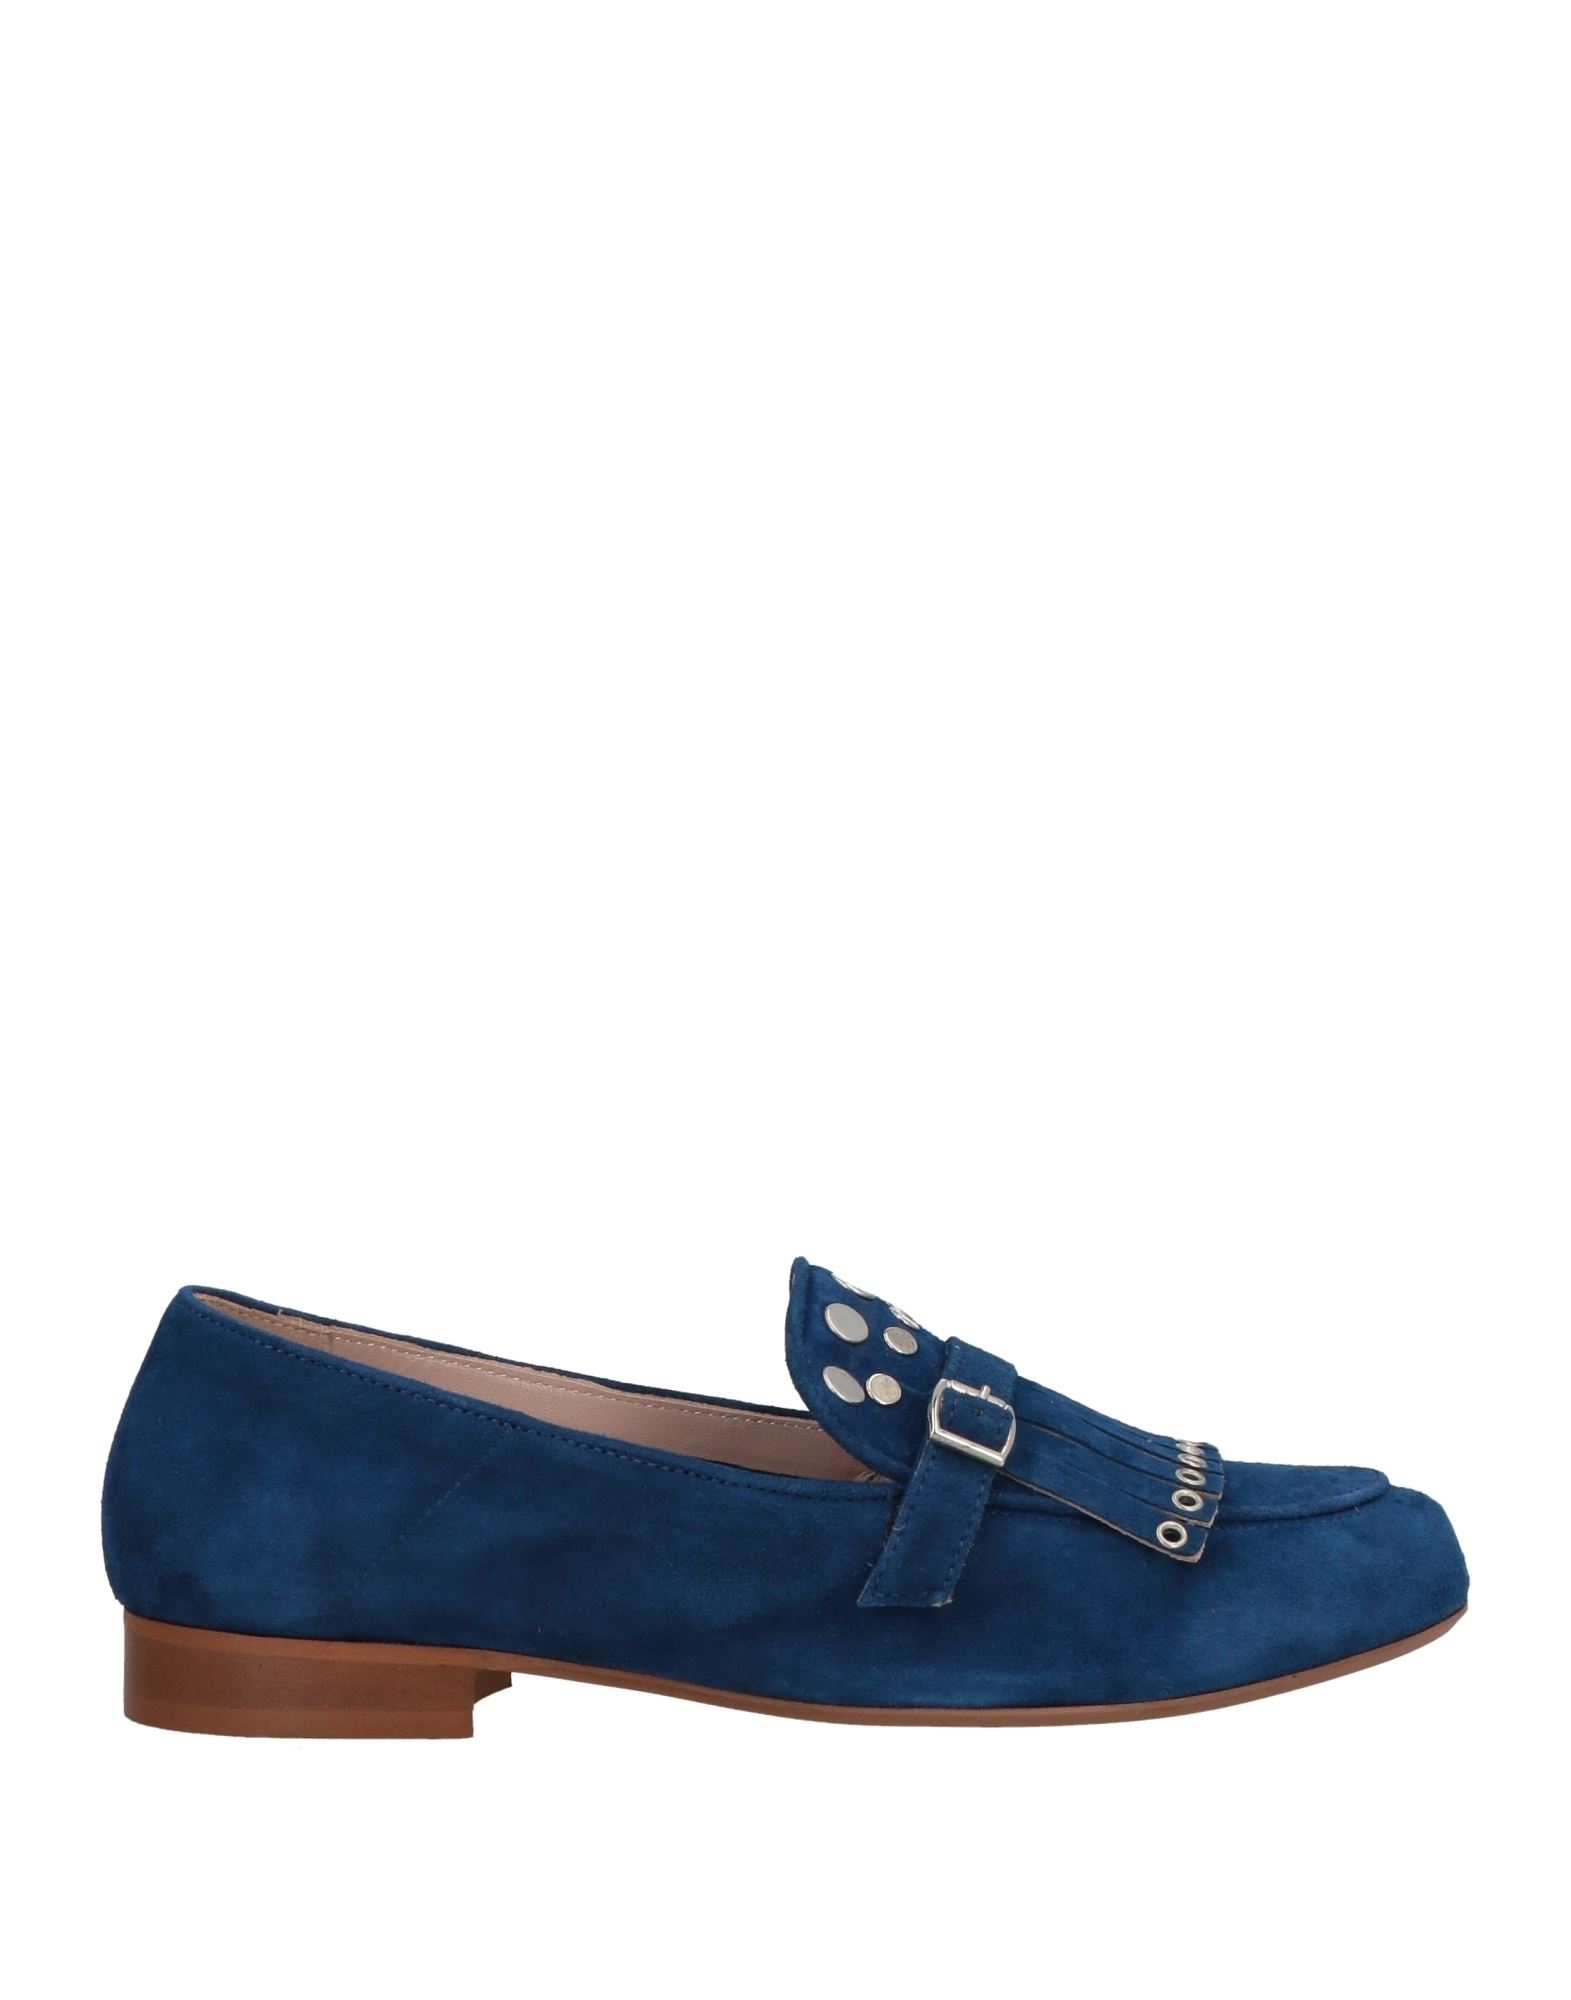 Paola Ferri Loafers In Blue